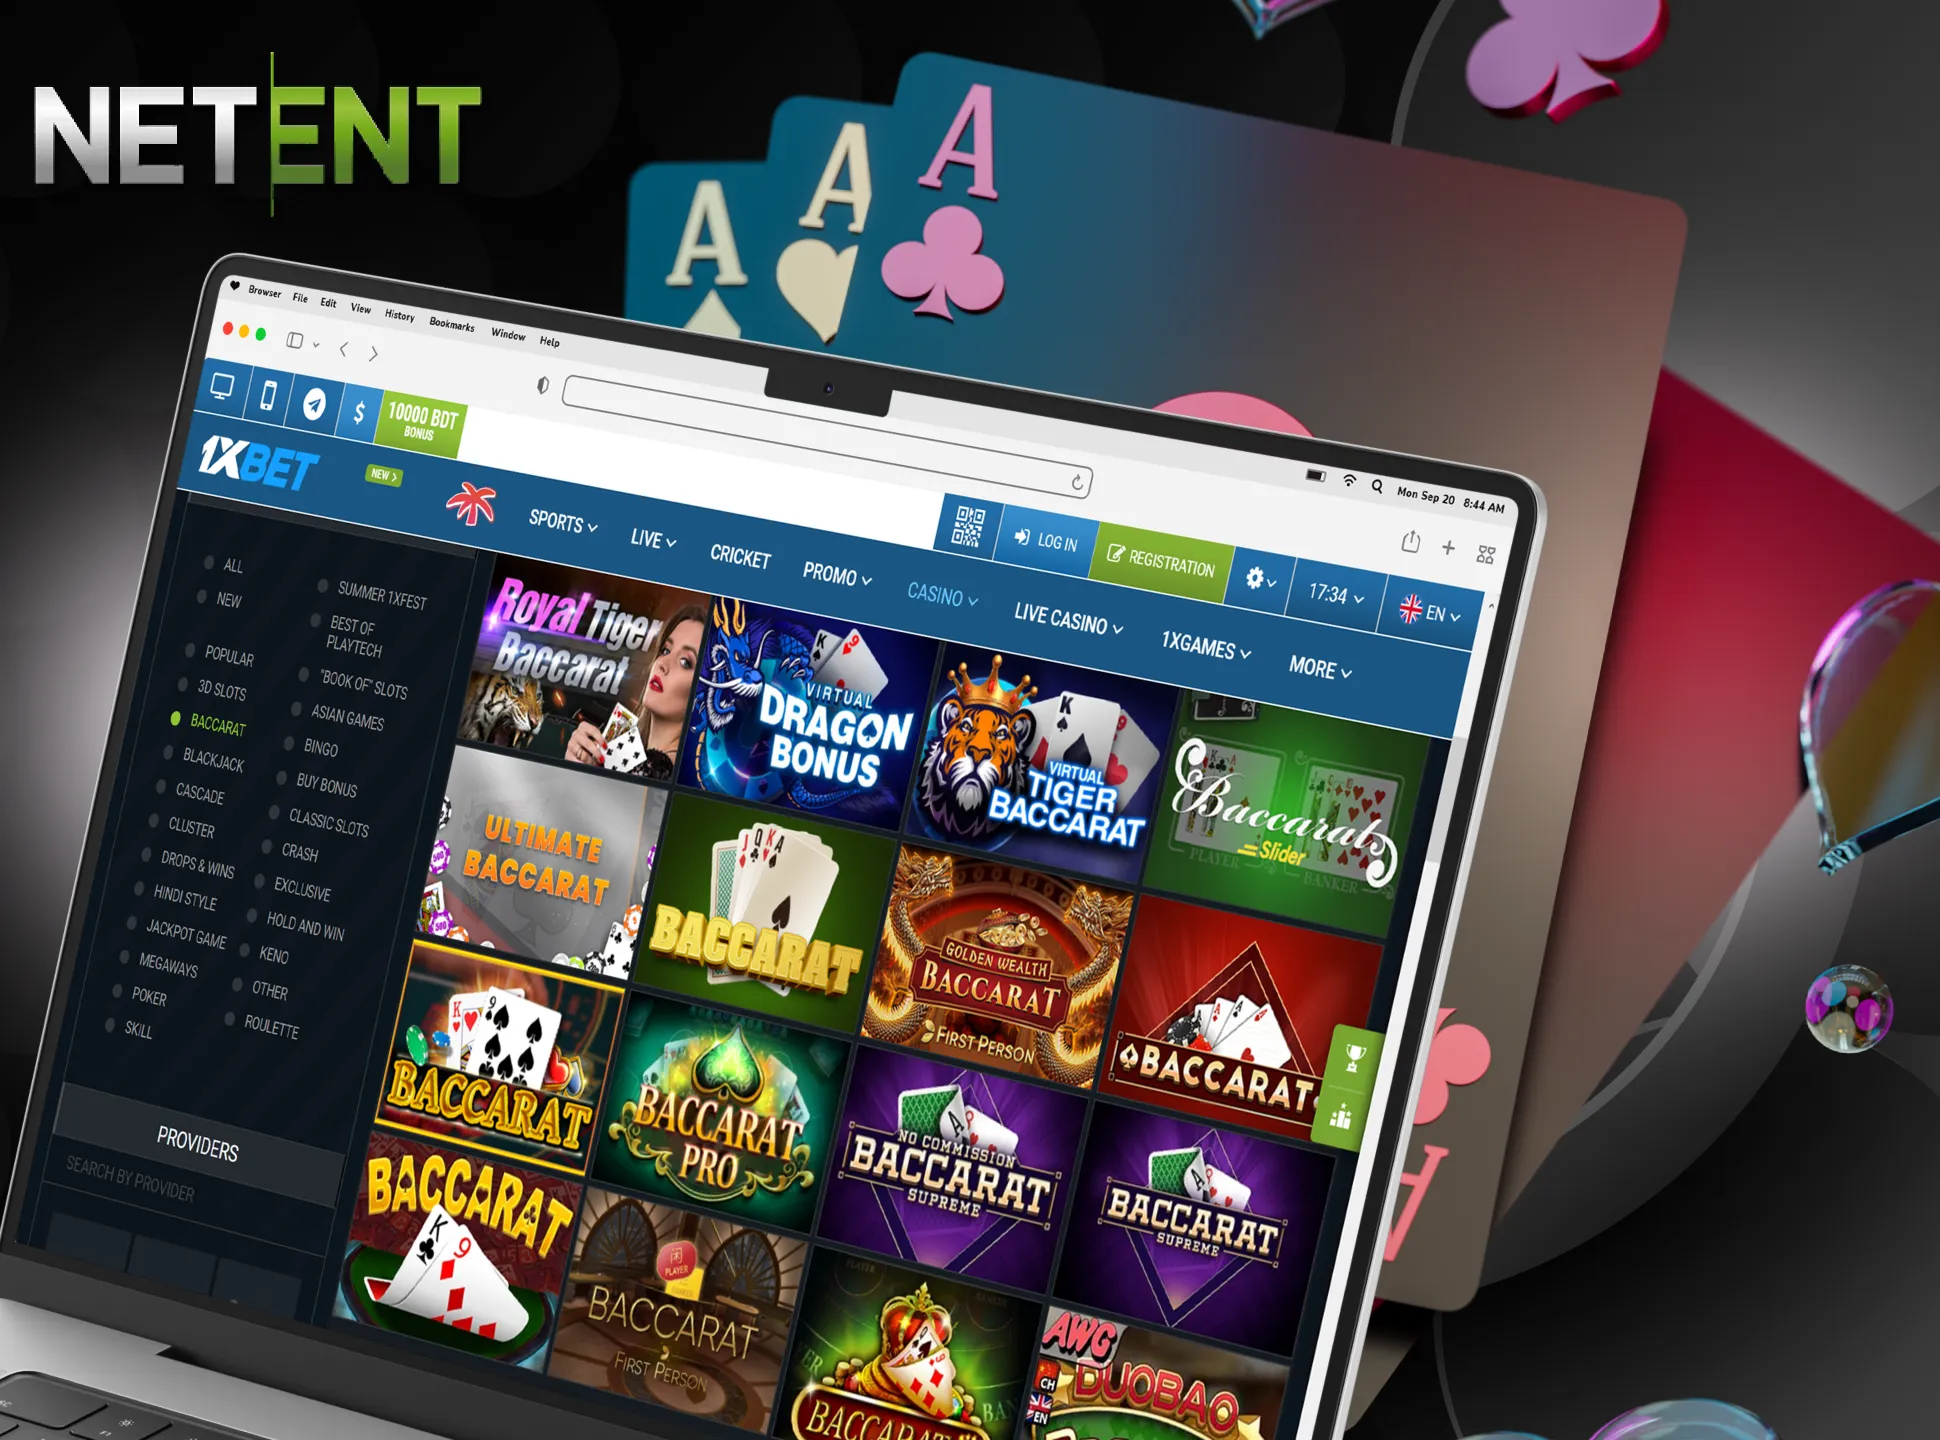 NetEnt also develop casino table games.